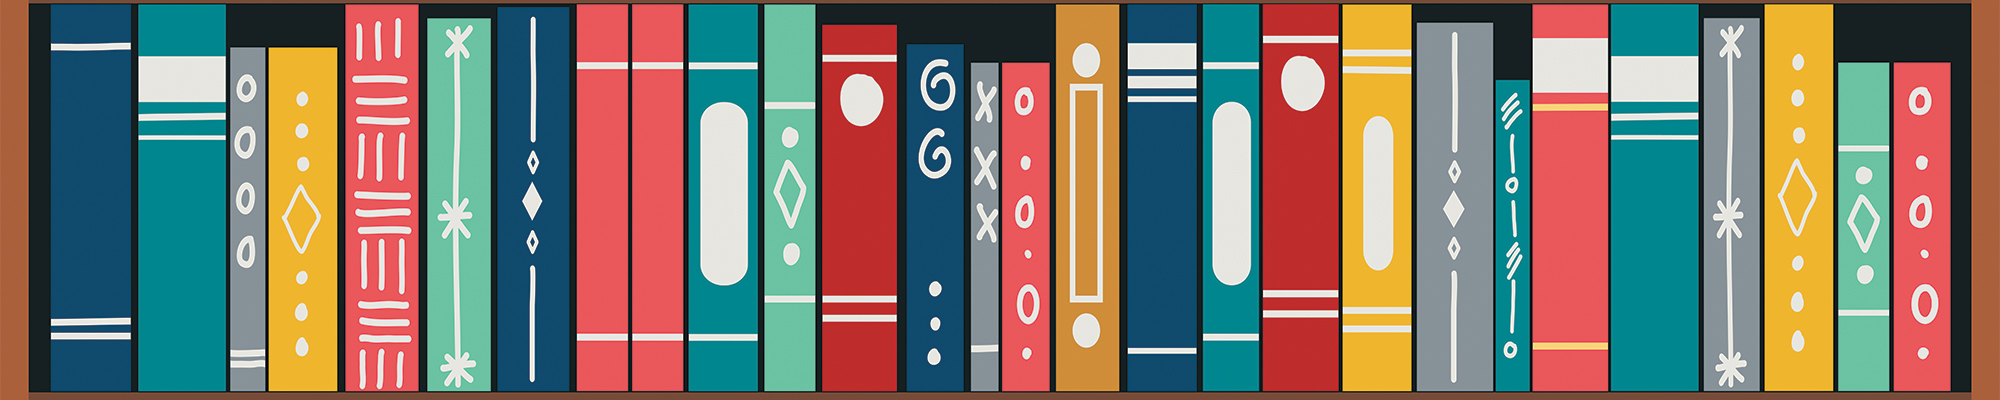 illustration of books on a shelf